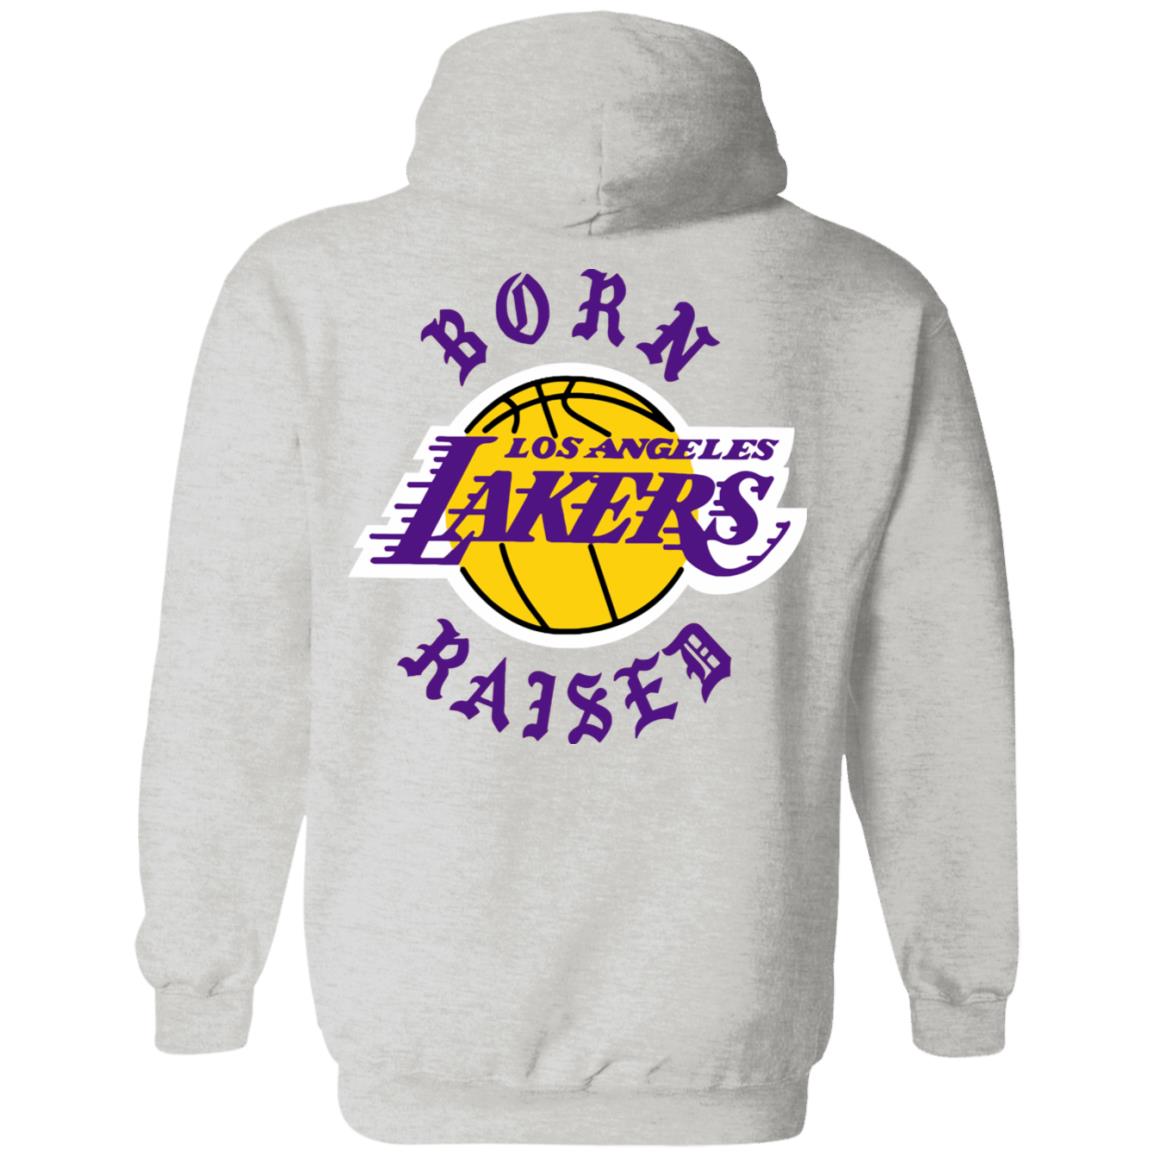 Born & Raised Lakers (Youth) - ENDANGERED LA